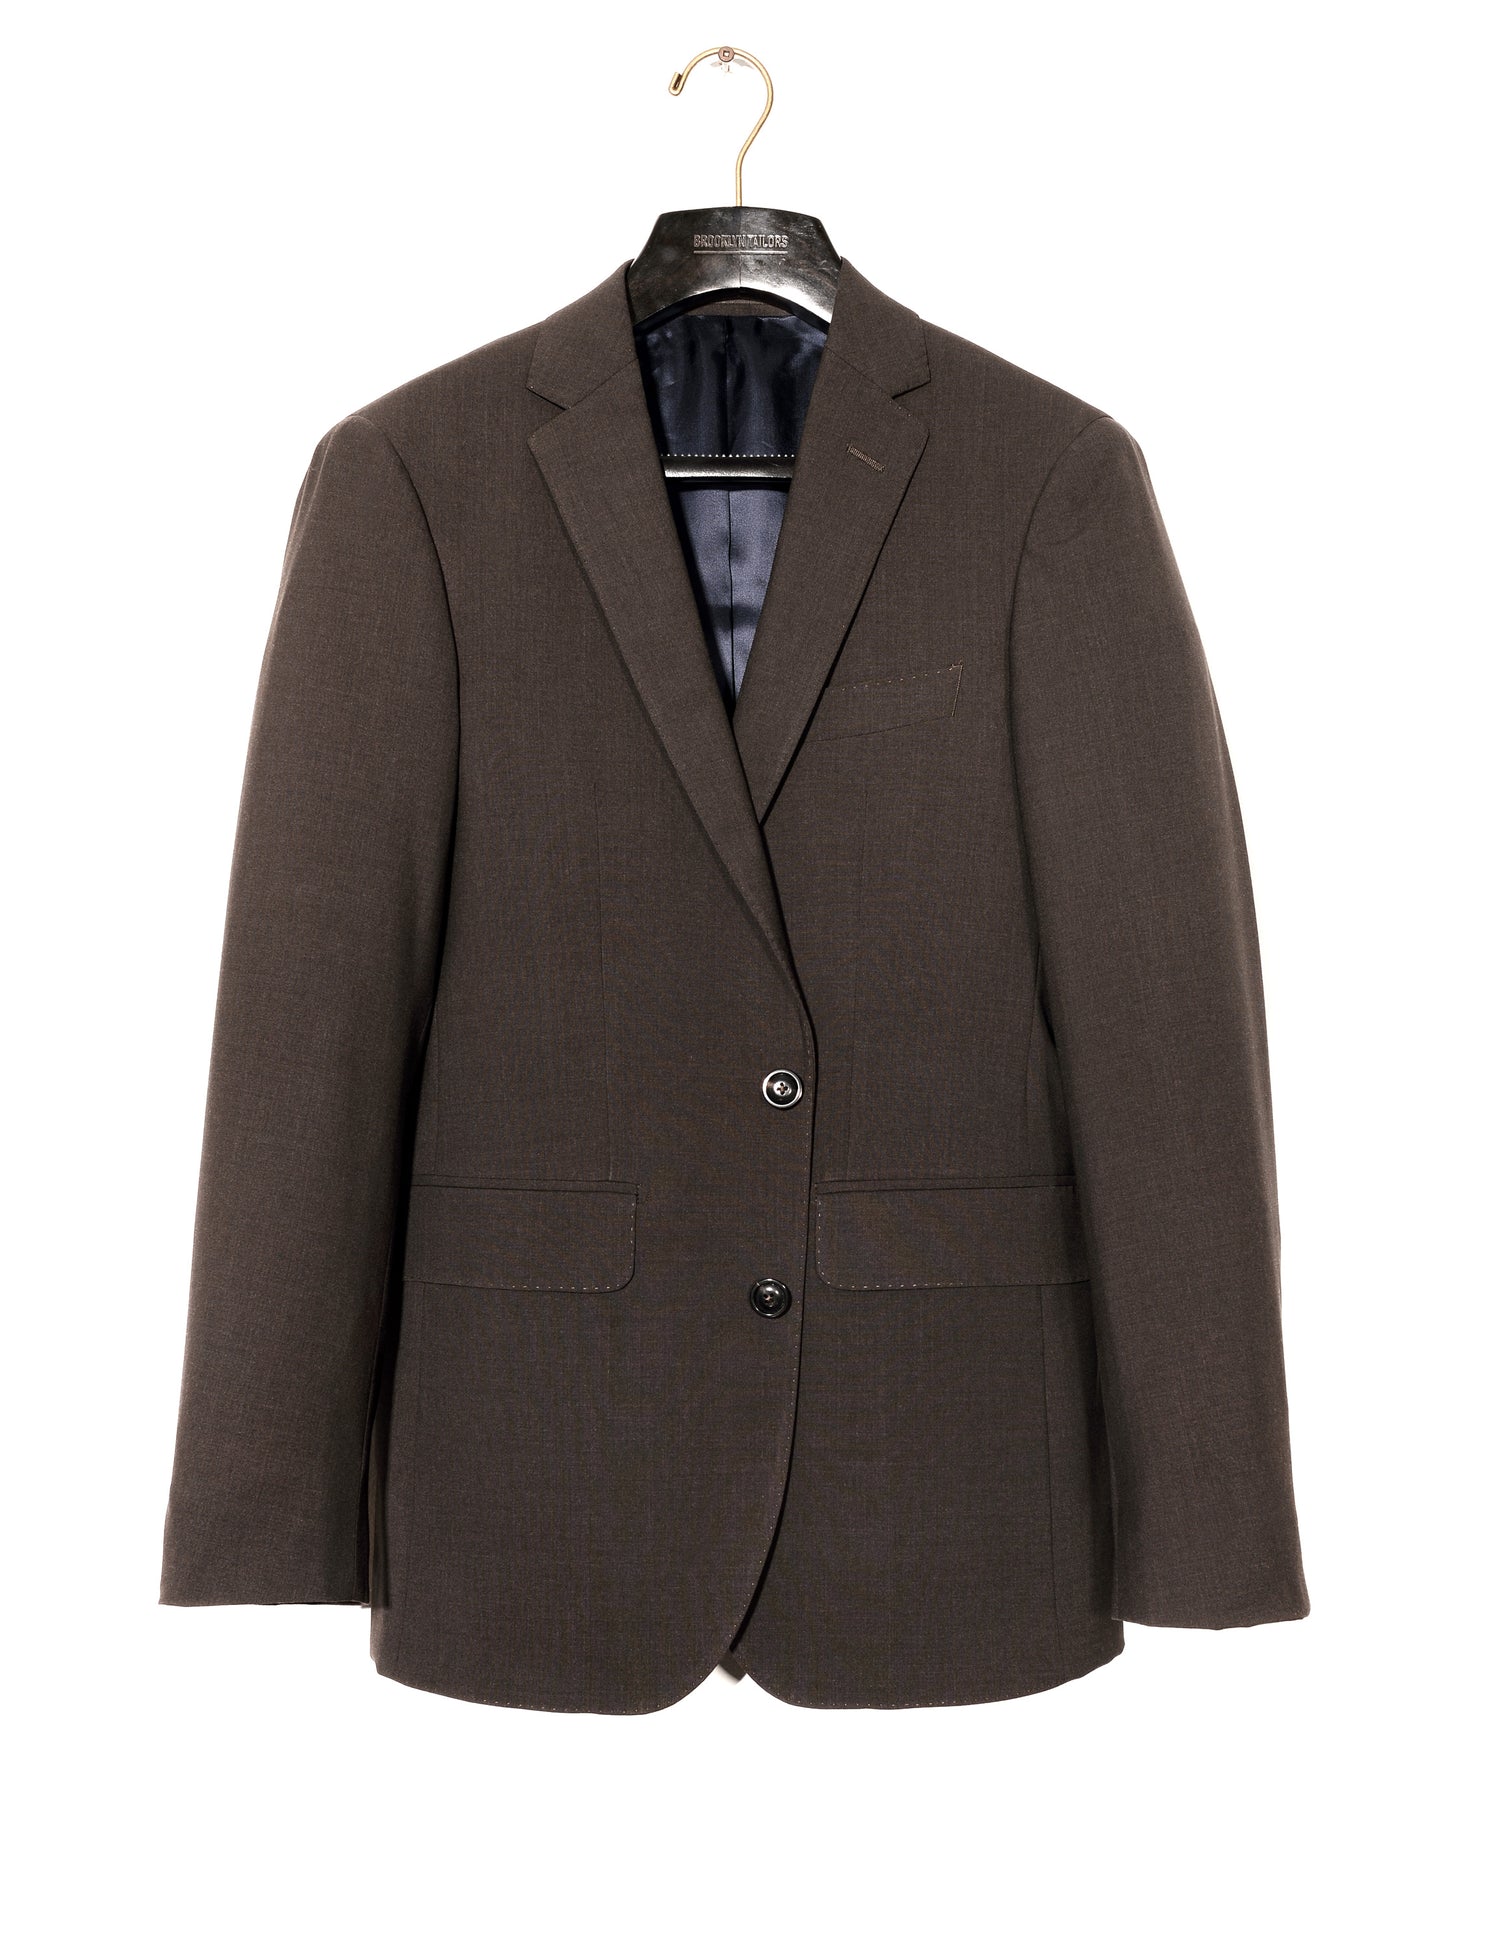 Brooklyn Tailors BKT50 Tailored Jacket in Heathered Plainweave - Charred Ember full length shot on hanger